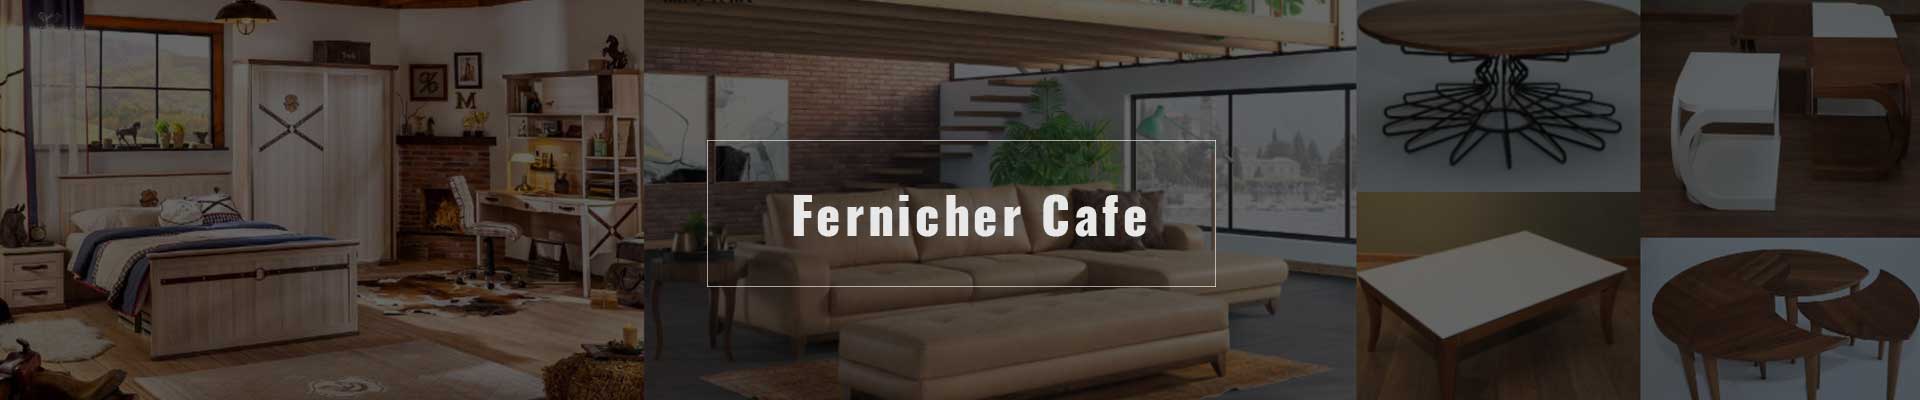 Fernicher Cafe